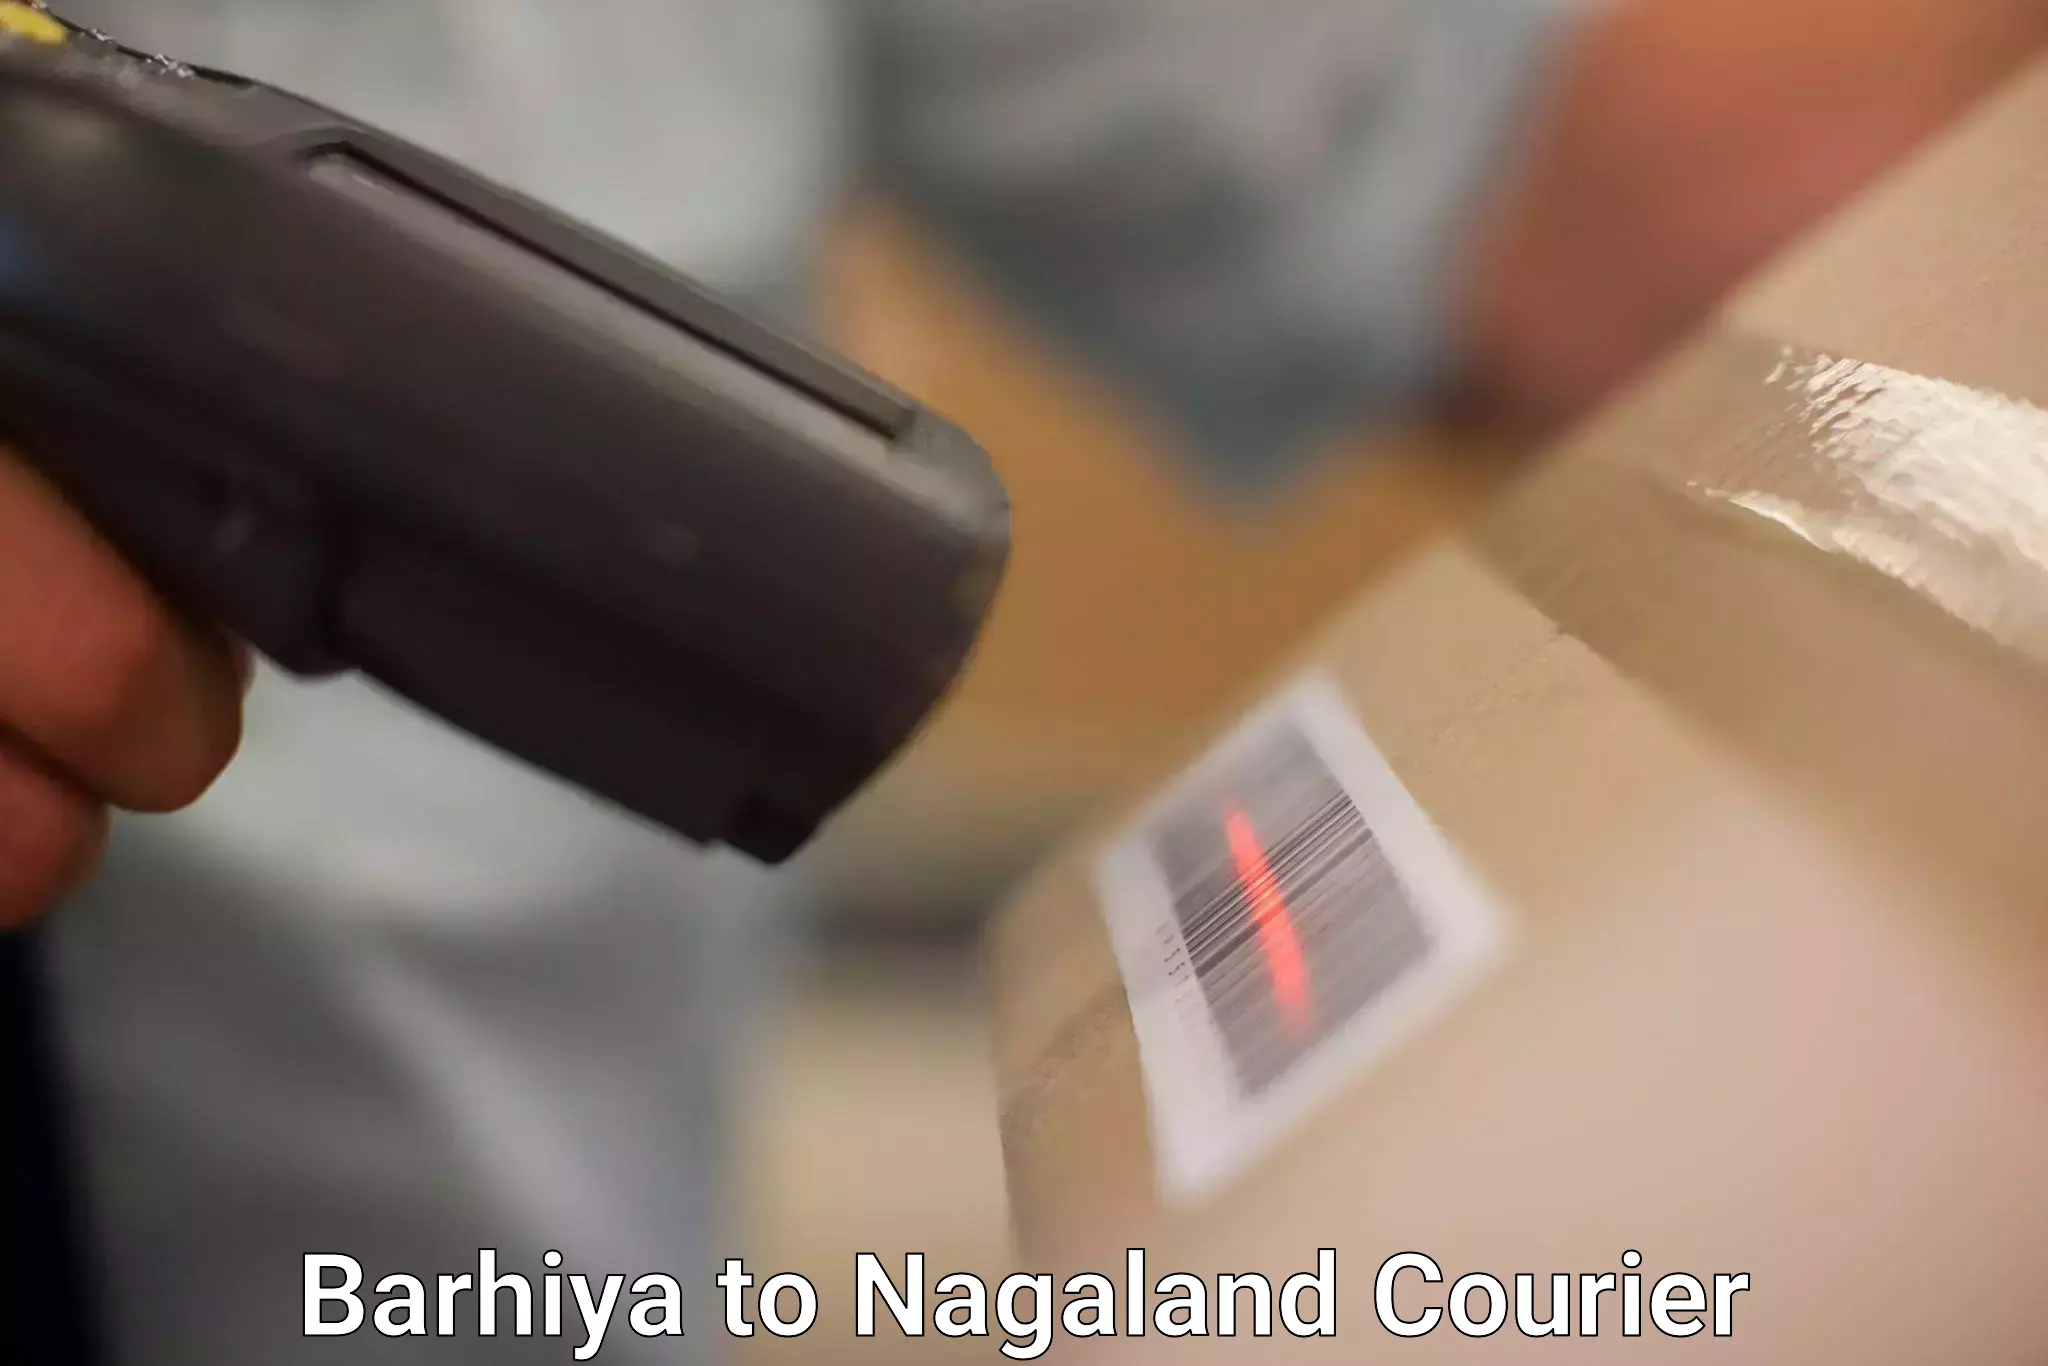 Courier service partnerships Barhiya to Nagaland